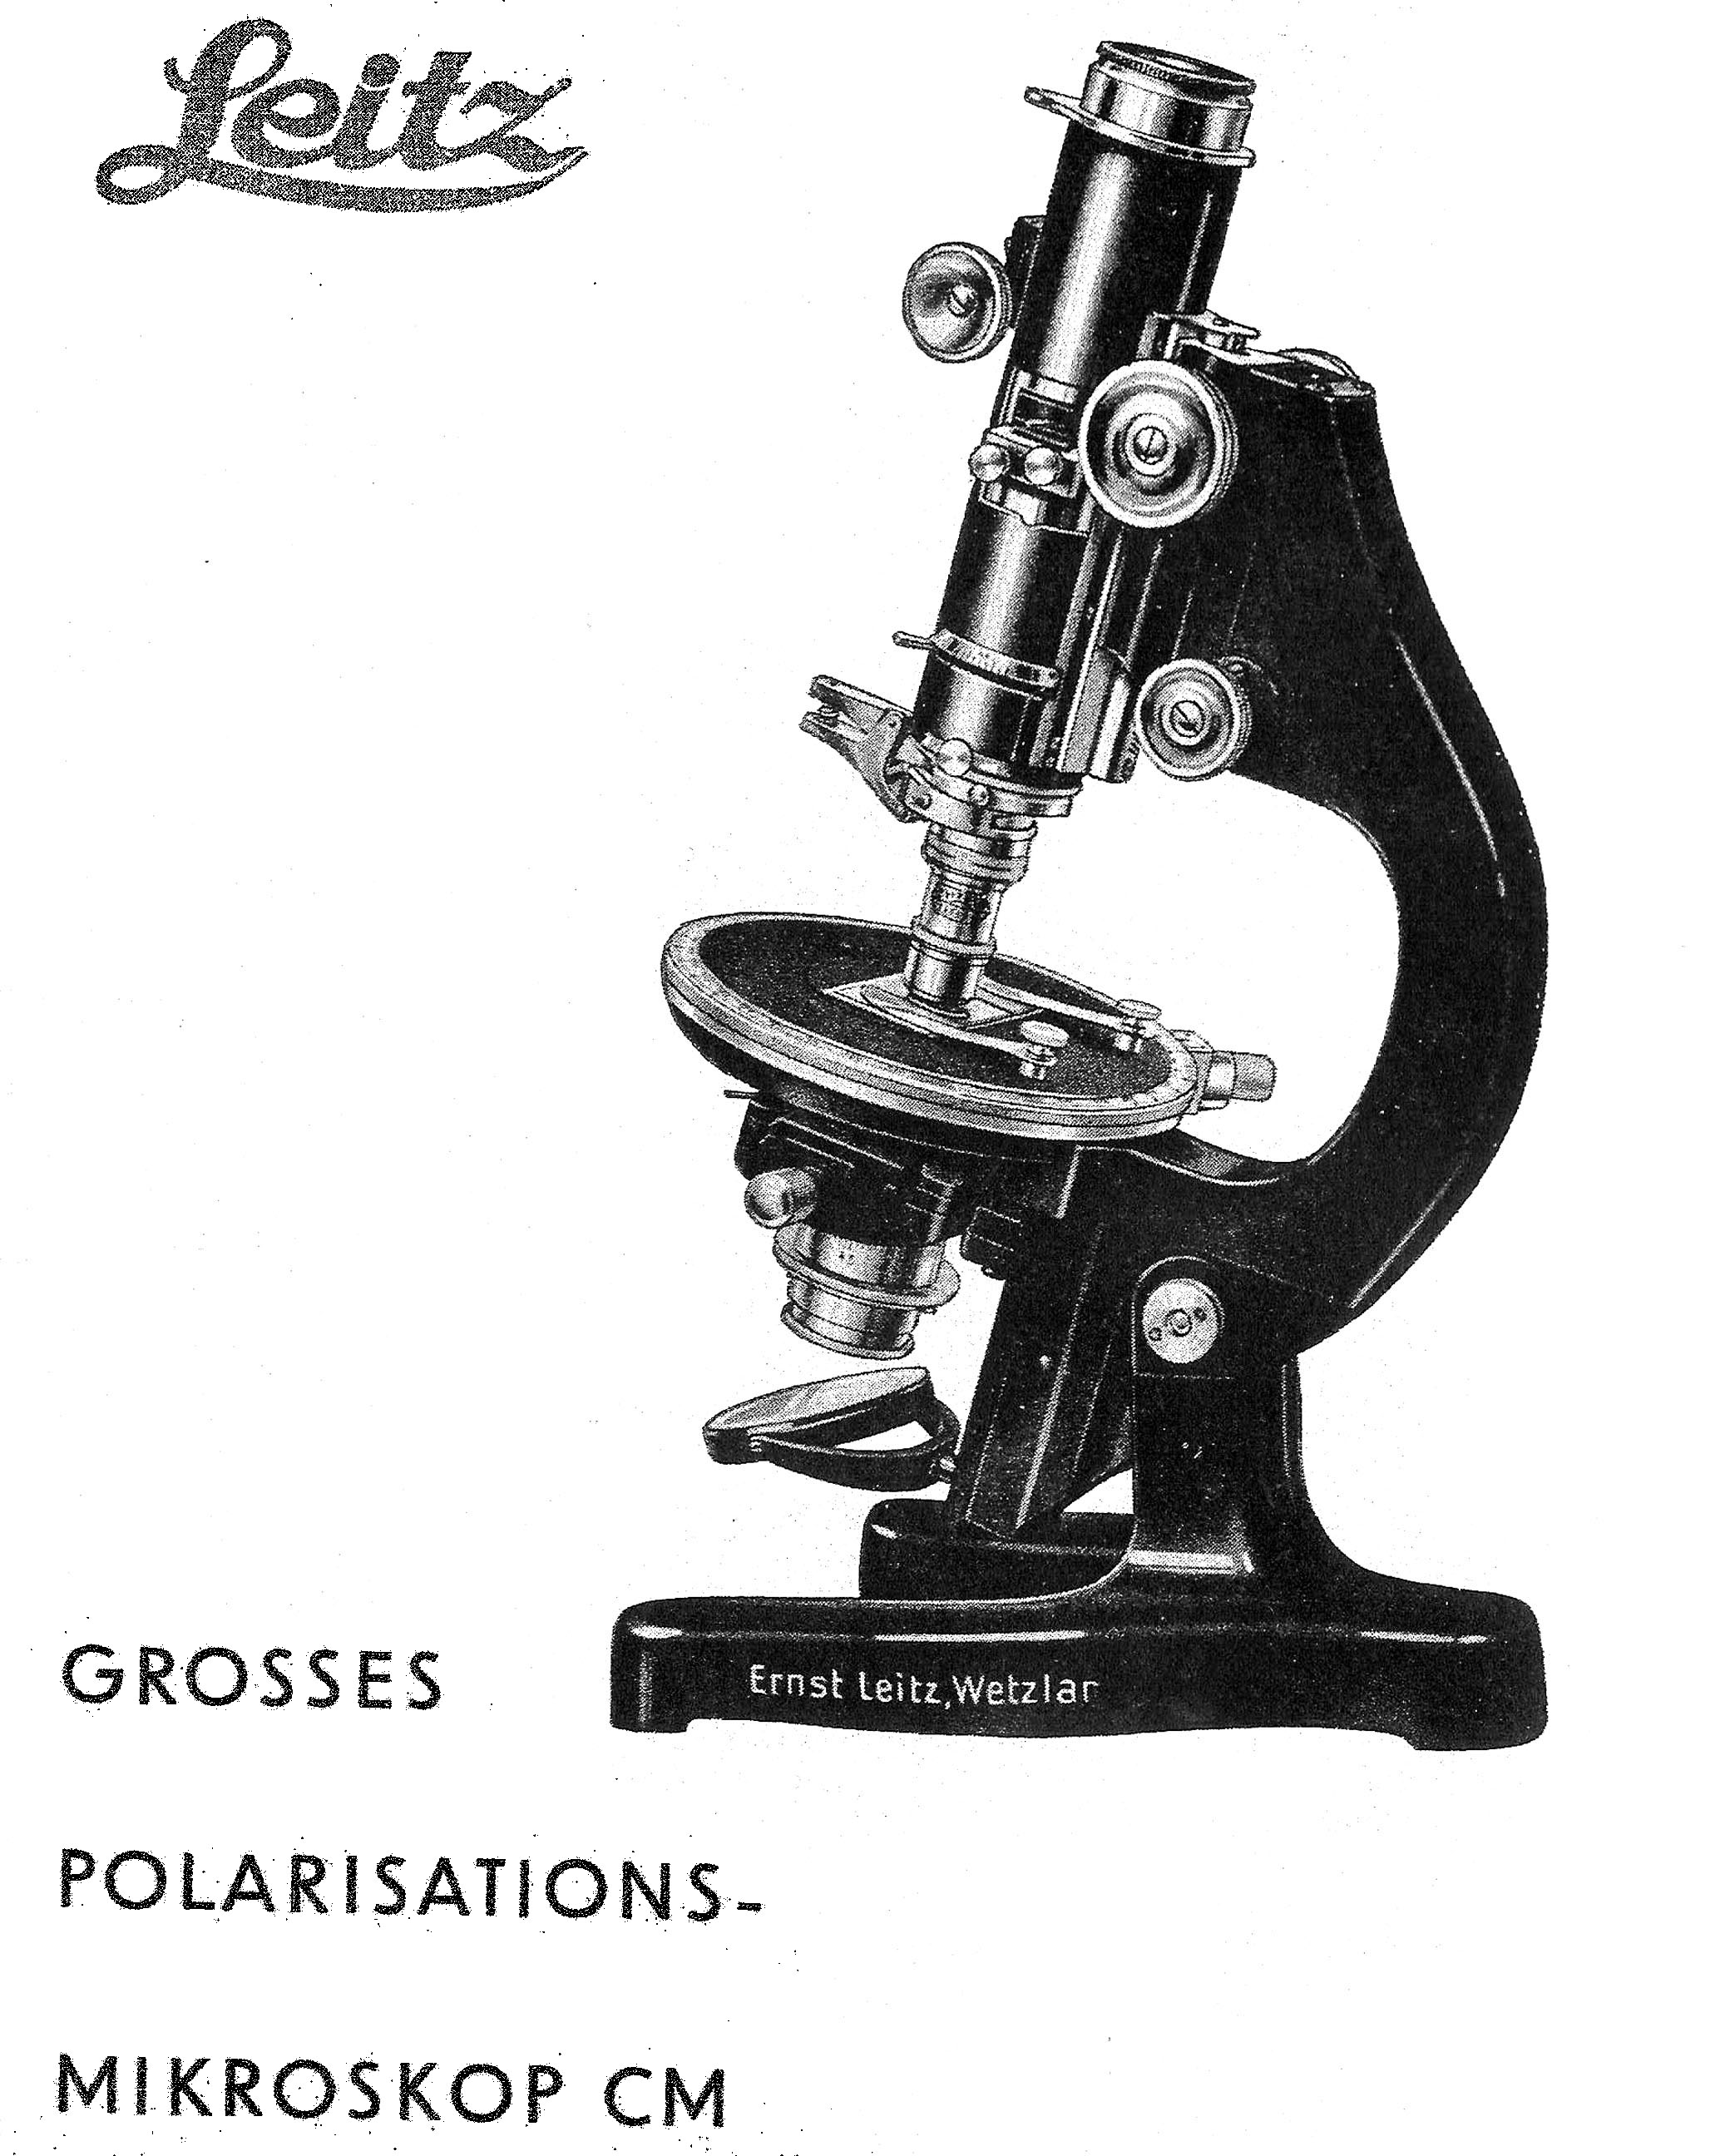 Leitz Pol Microscope Catalog image about 1950